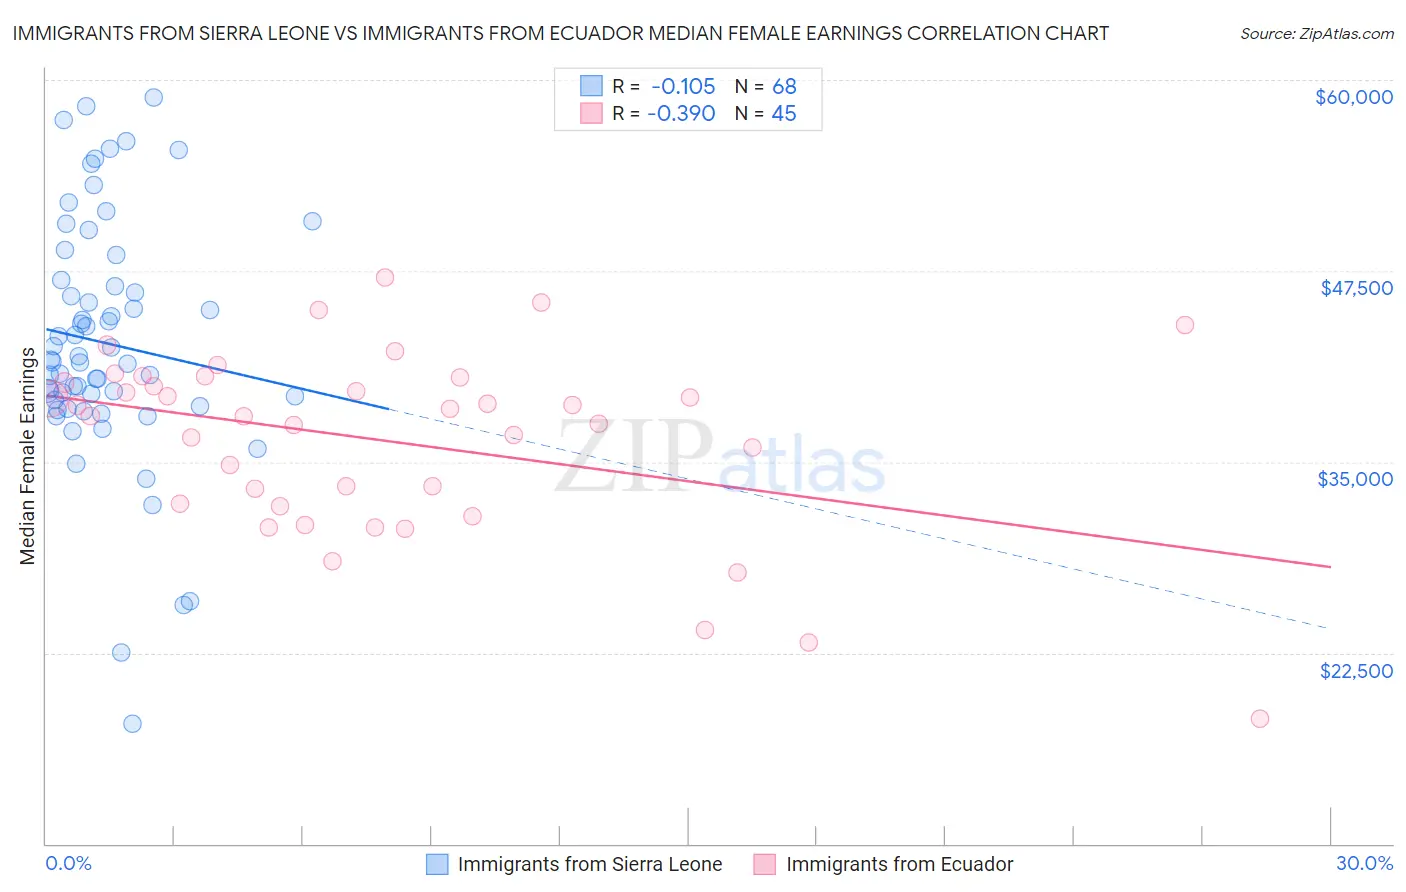 Immigrants from Sierra Leone vs Immigrants from Ecuador Median Female Earnings